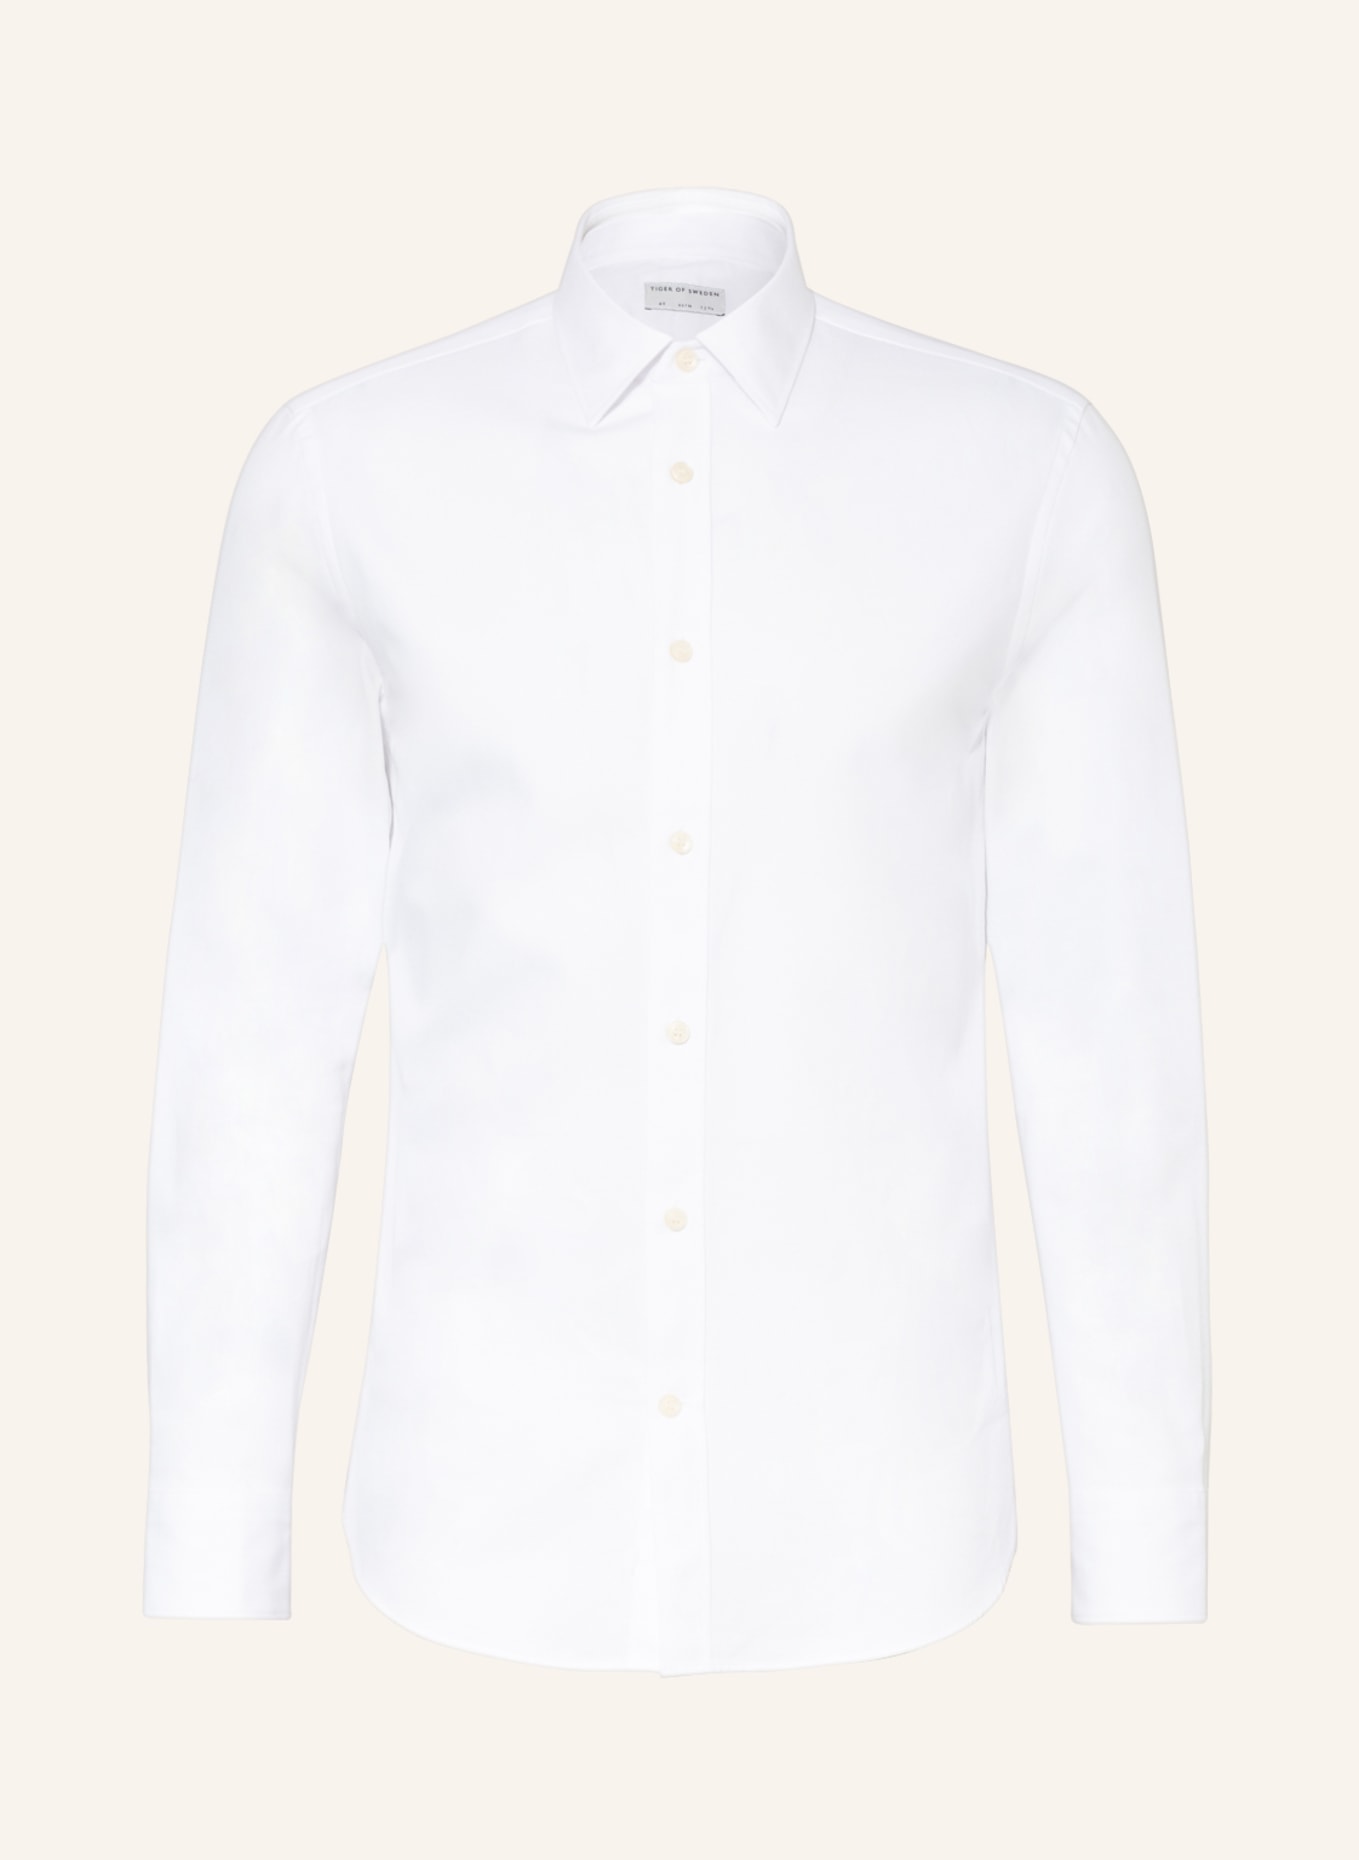 TIGER OF SWEDEN Hemd ADLEY Slim Fit, Farbe: WEISS (Bild 1)